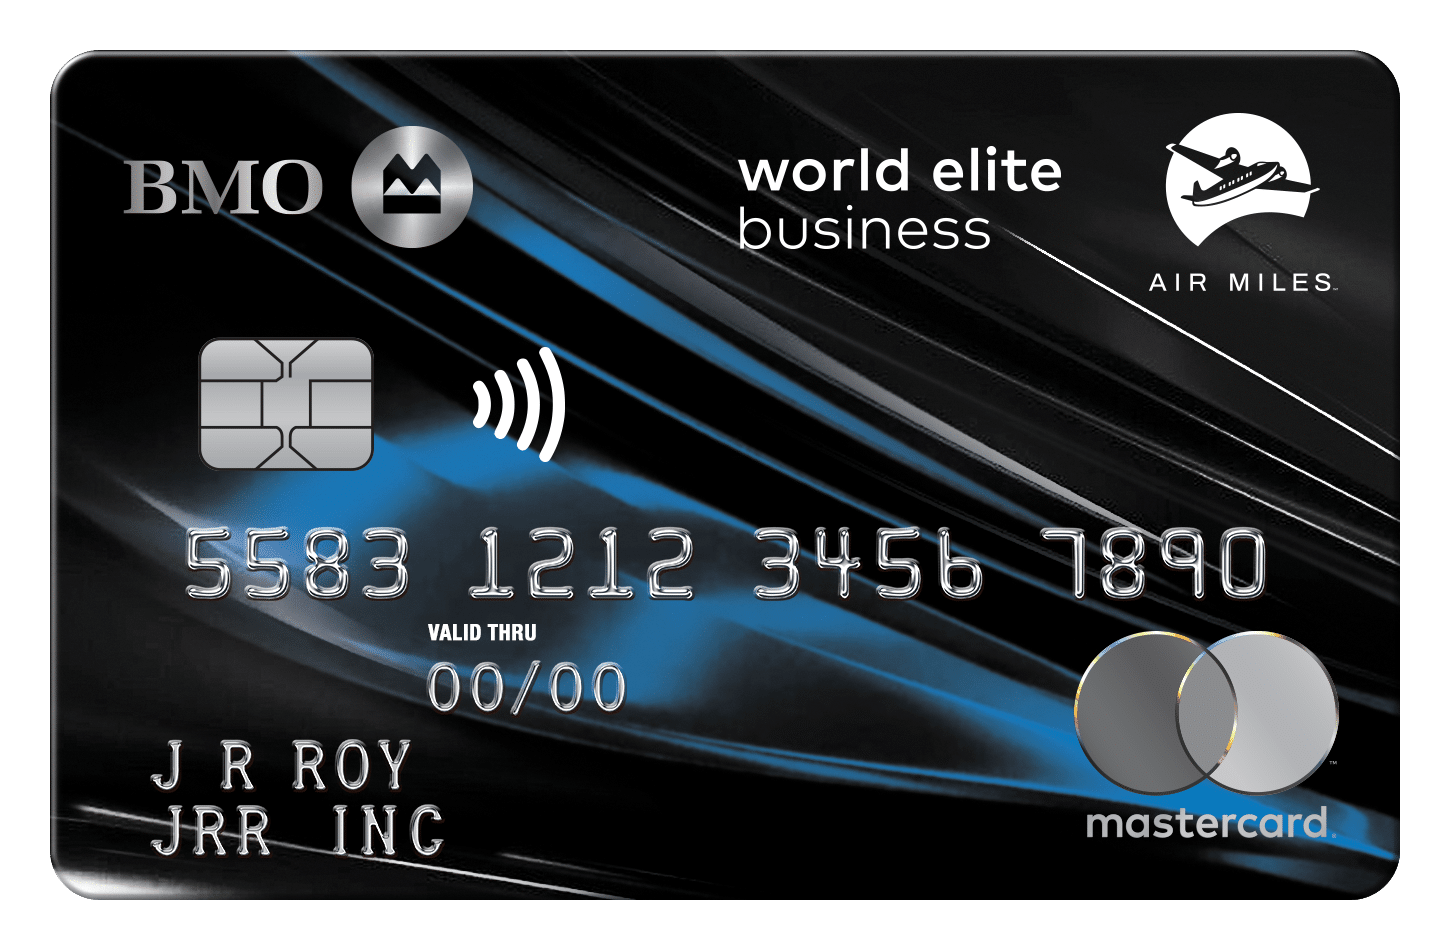 bmo world elite mastercard travel booking